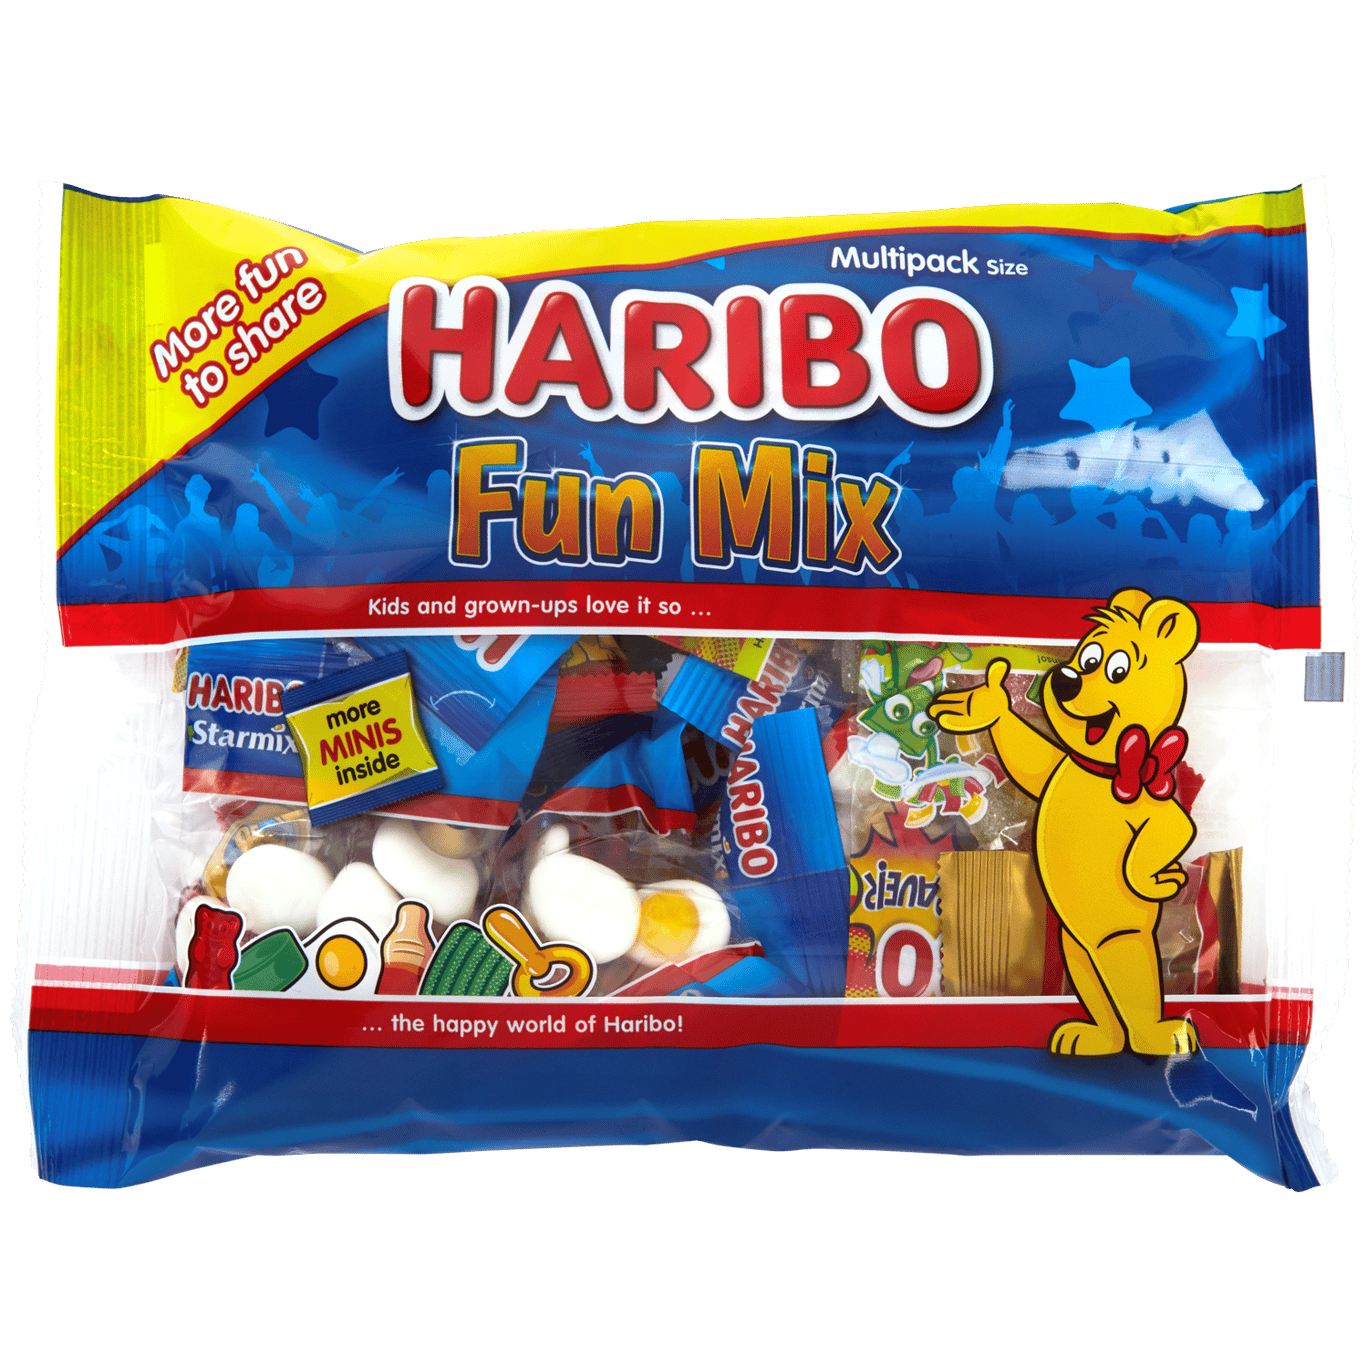 Sachet à distribuer Haribo Fun Mix